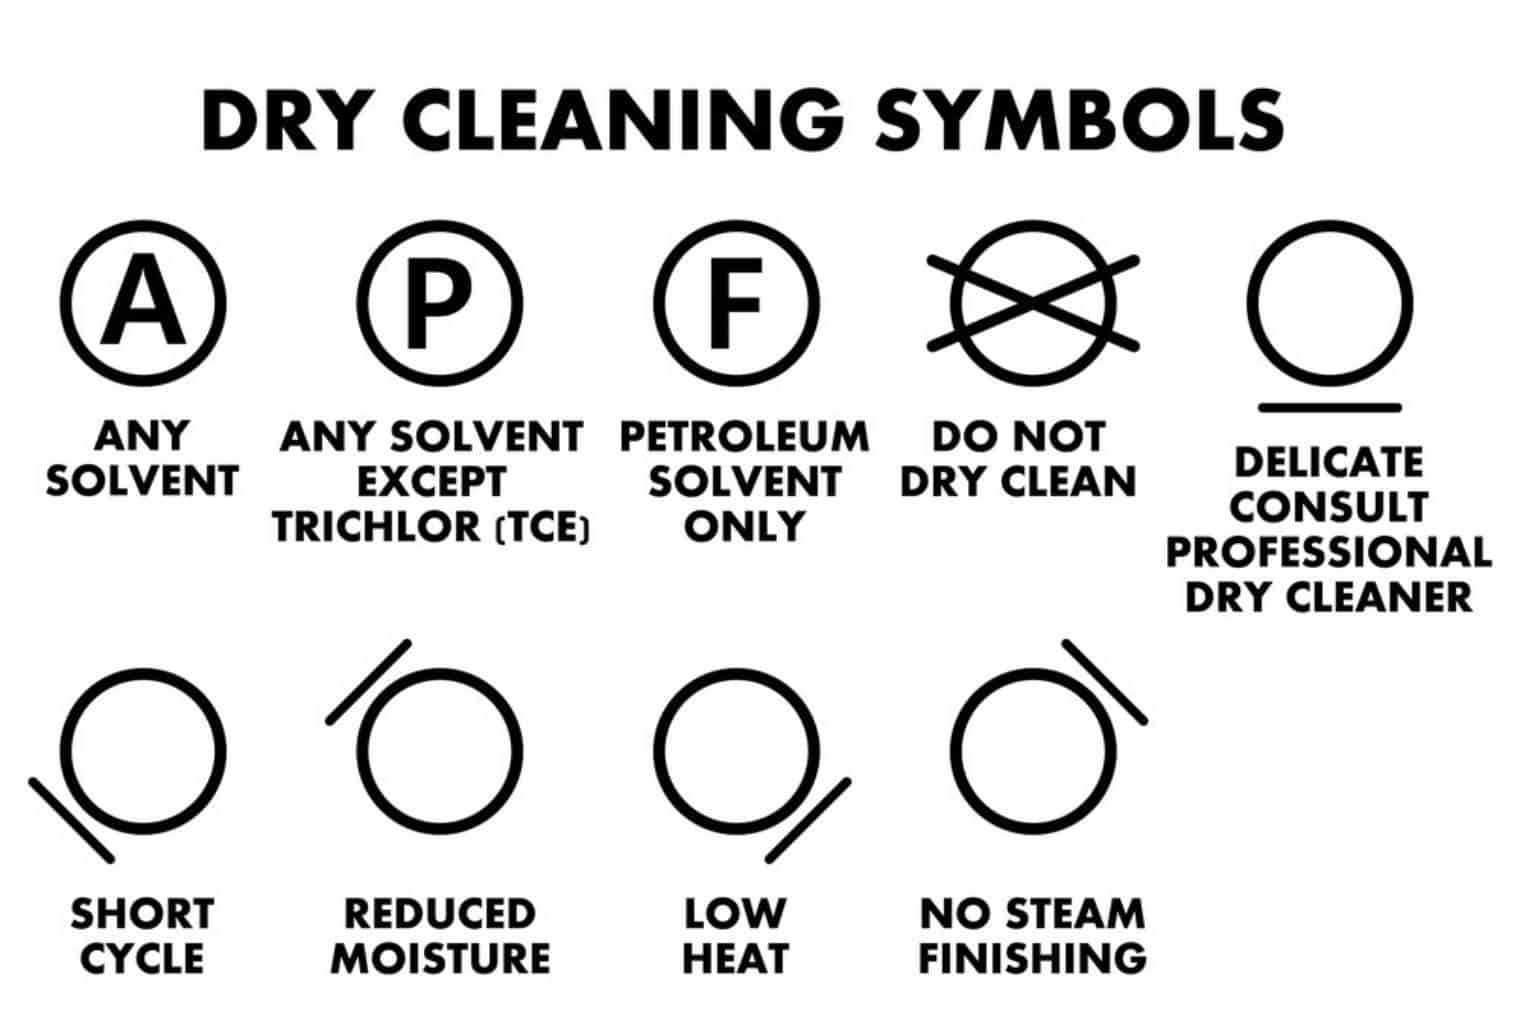 Dry Clean symbols